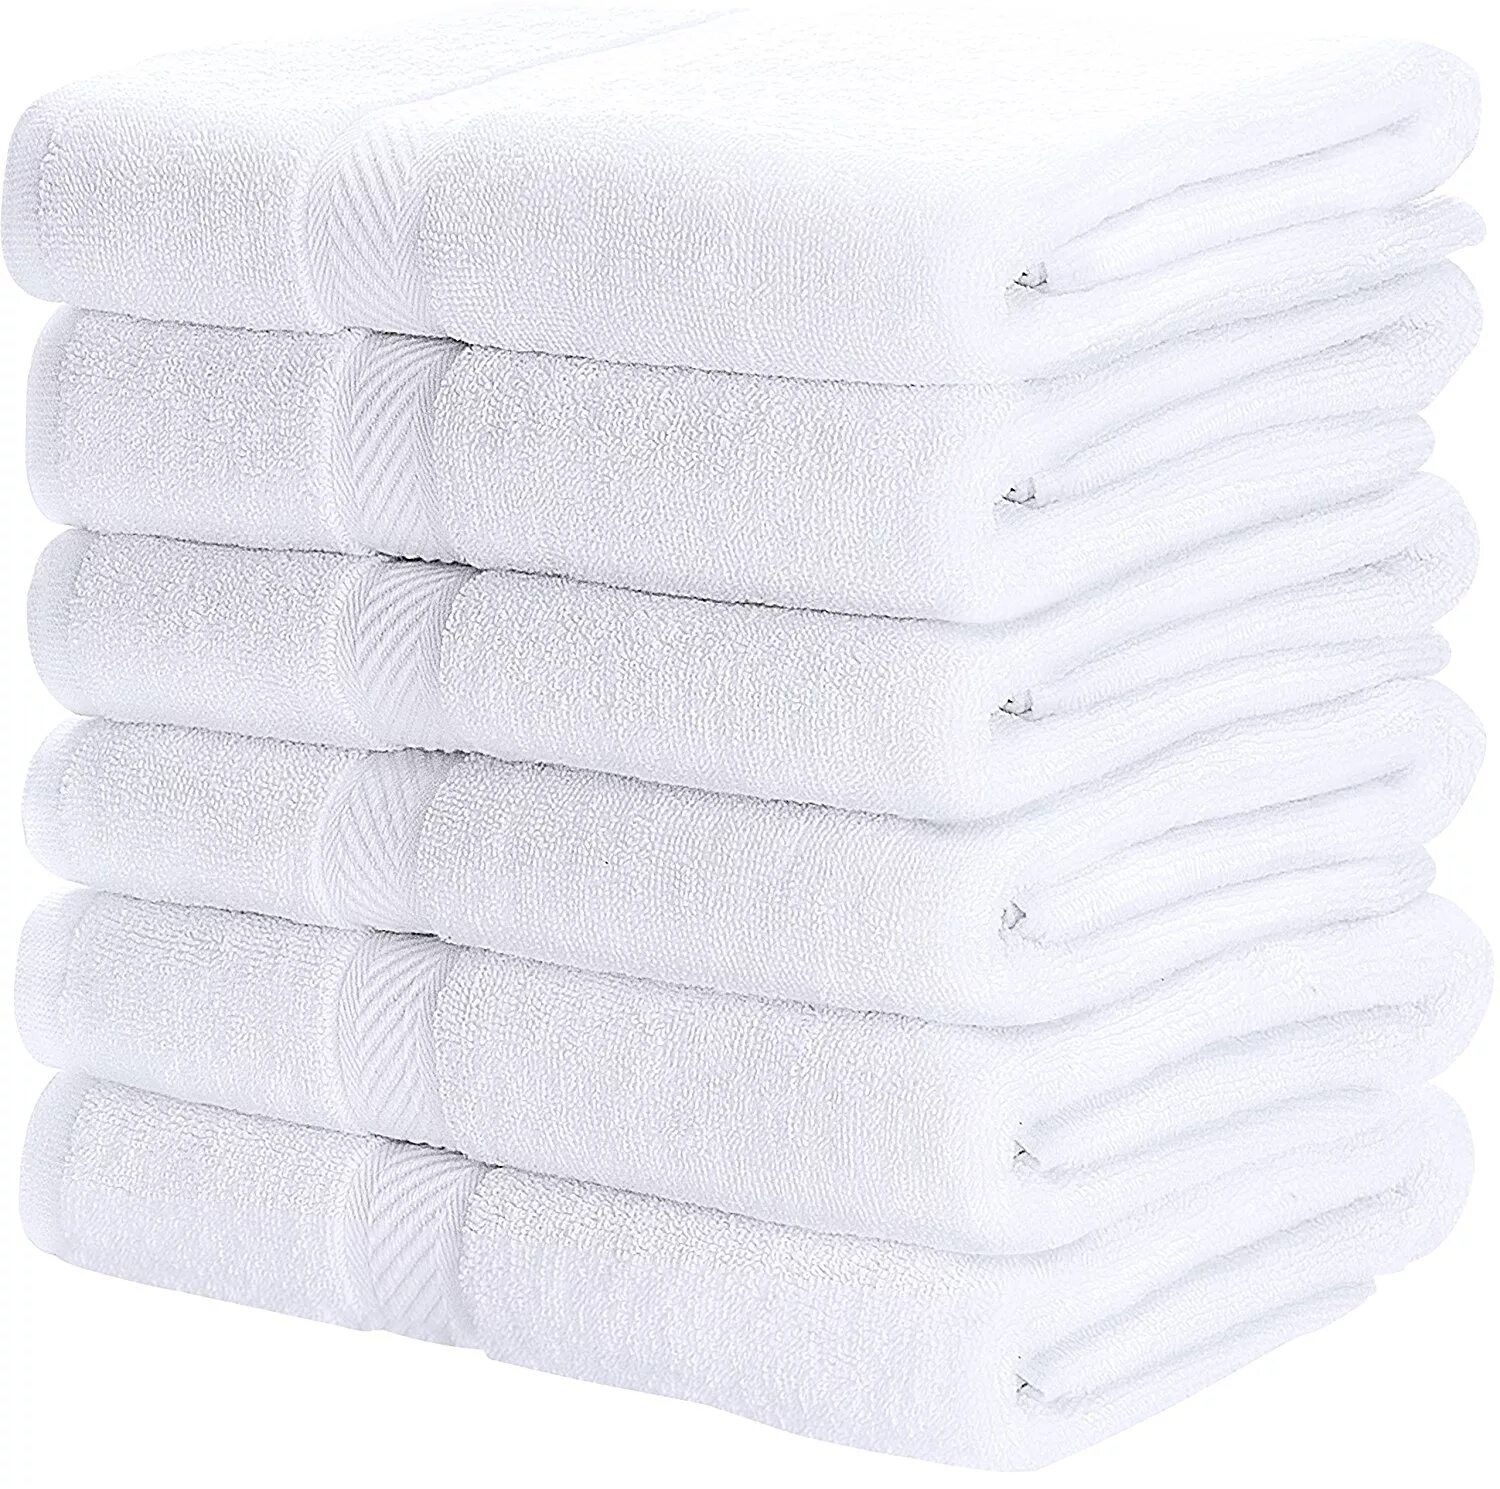 Полотенце Bath Towel. Полотенце 70x140, po0093. Белоснежные полотенца. Стопка белых полотенец. White полотенца